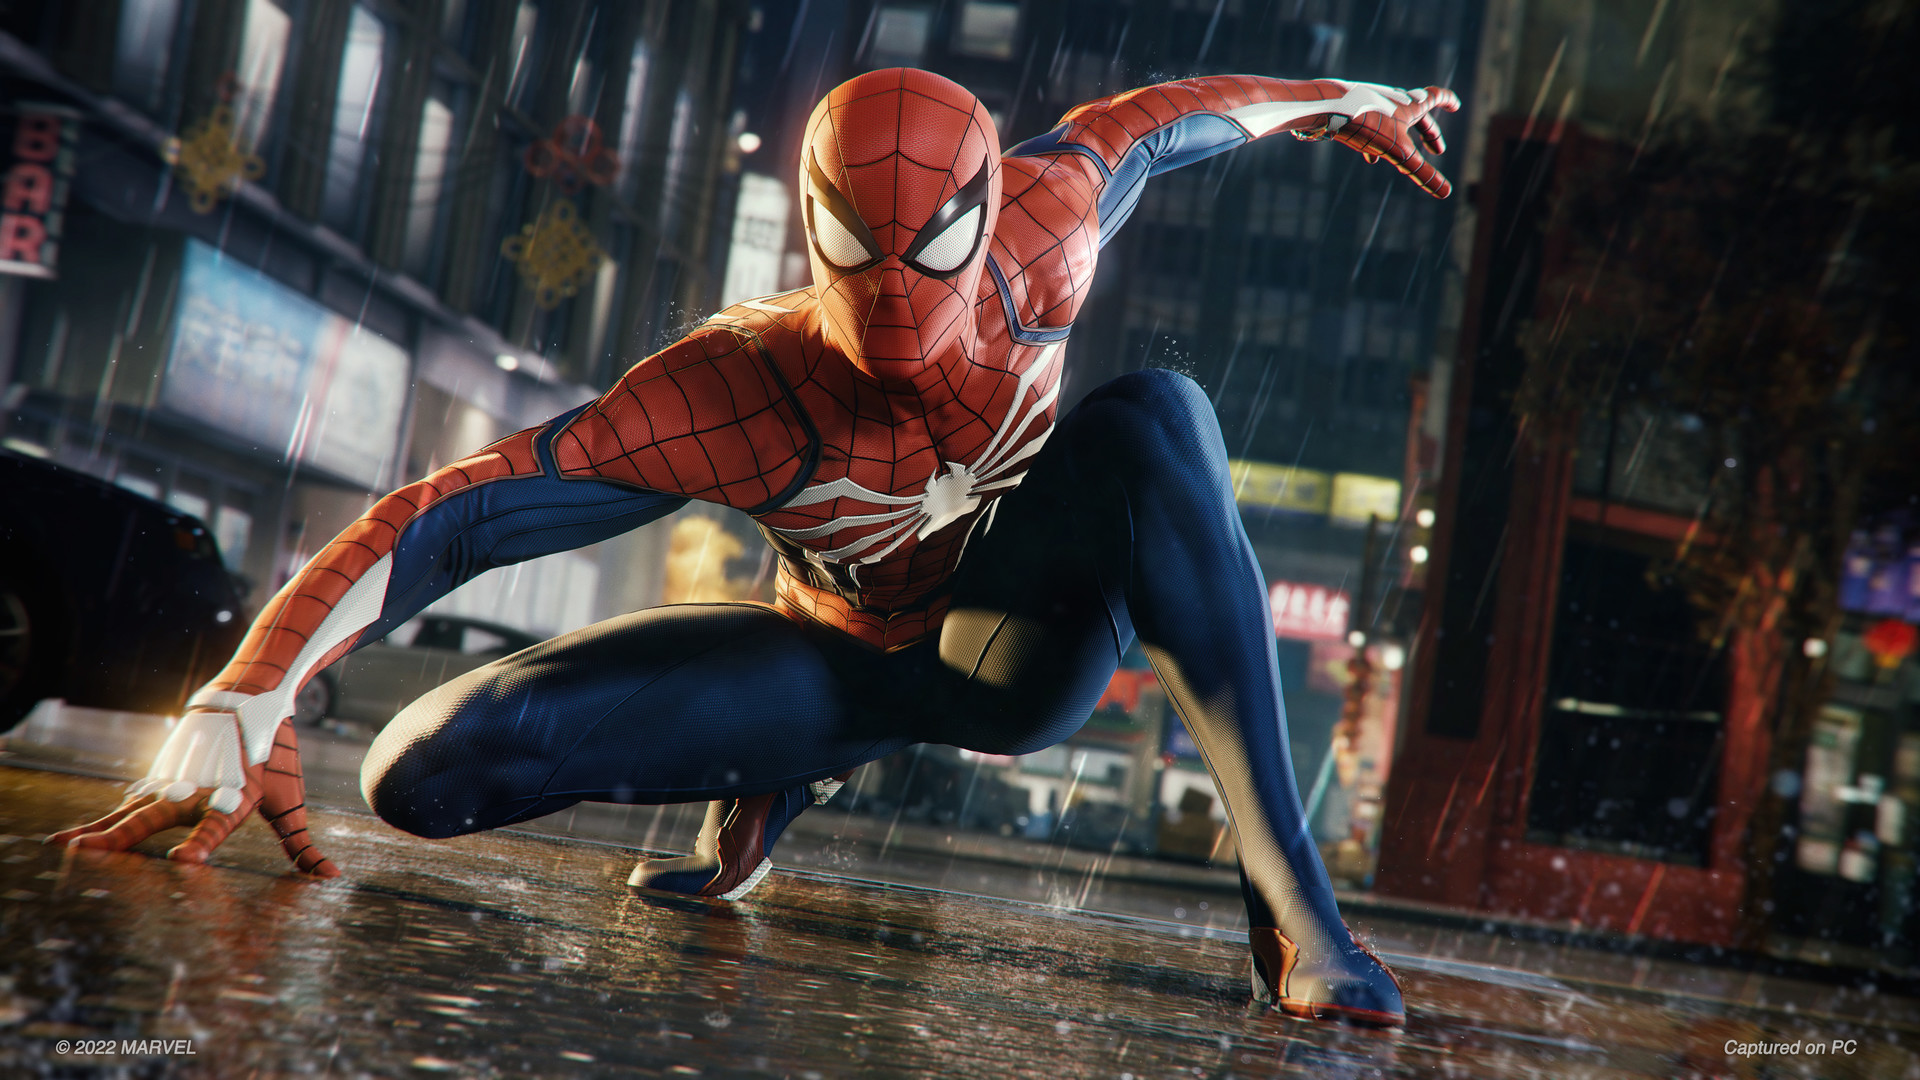 Jogo Marvel`s Spider-Man - PS4, Shopping